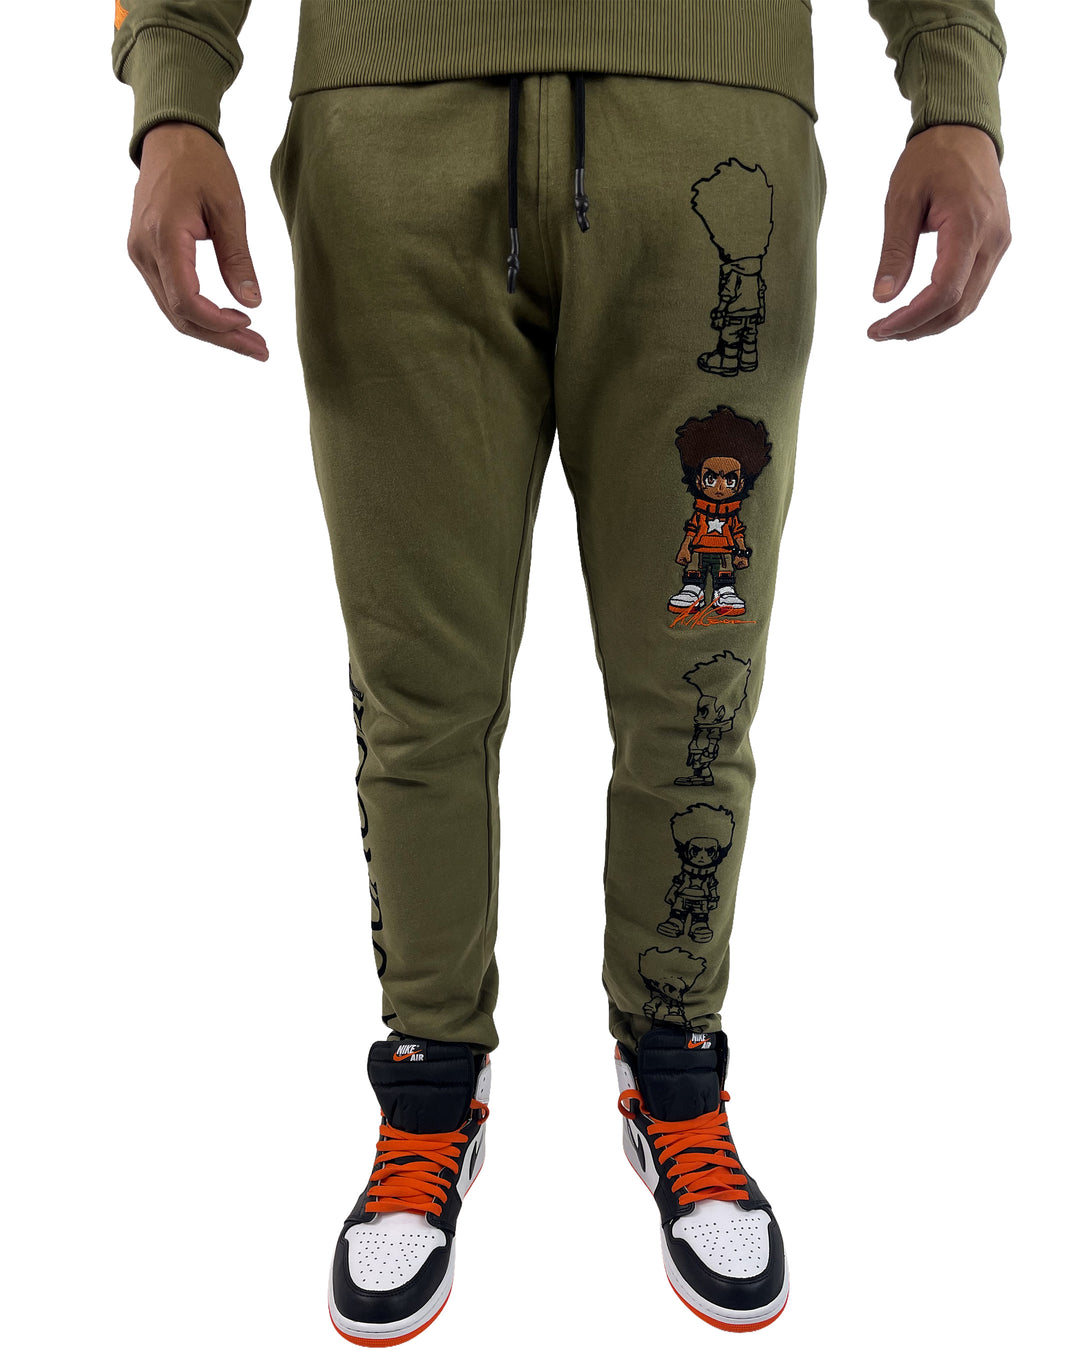 deKryptic x The Boondocks - Huey Embroidered Olive Sweatpants